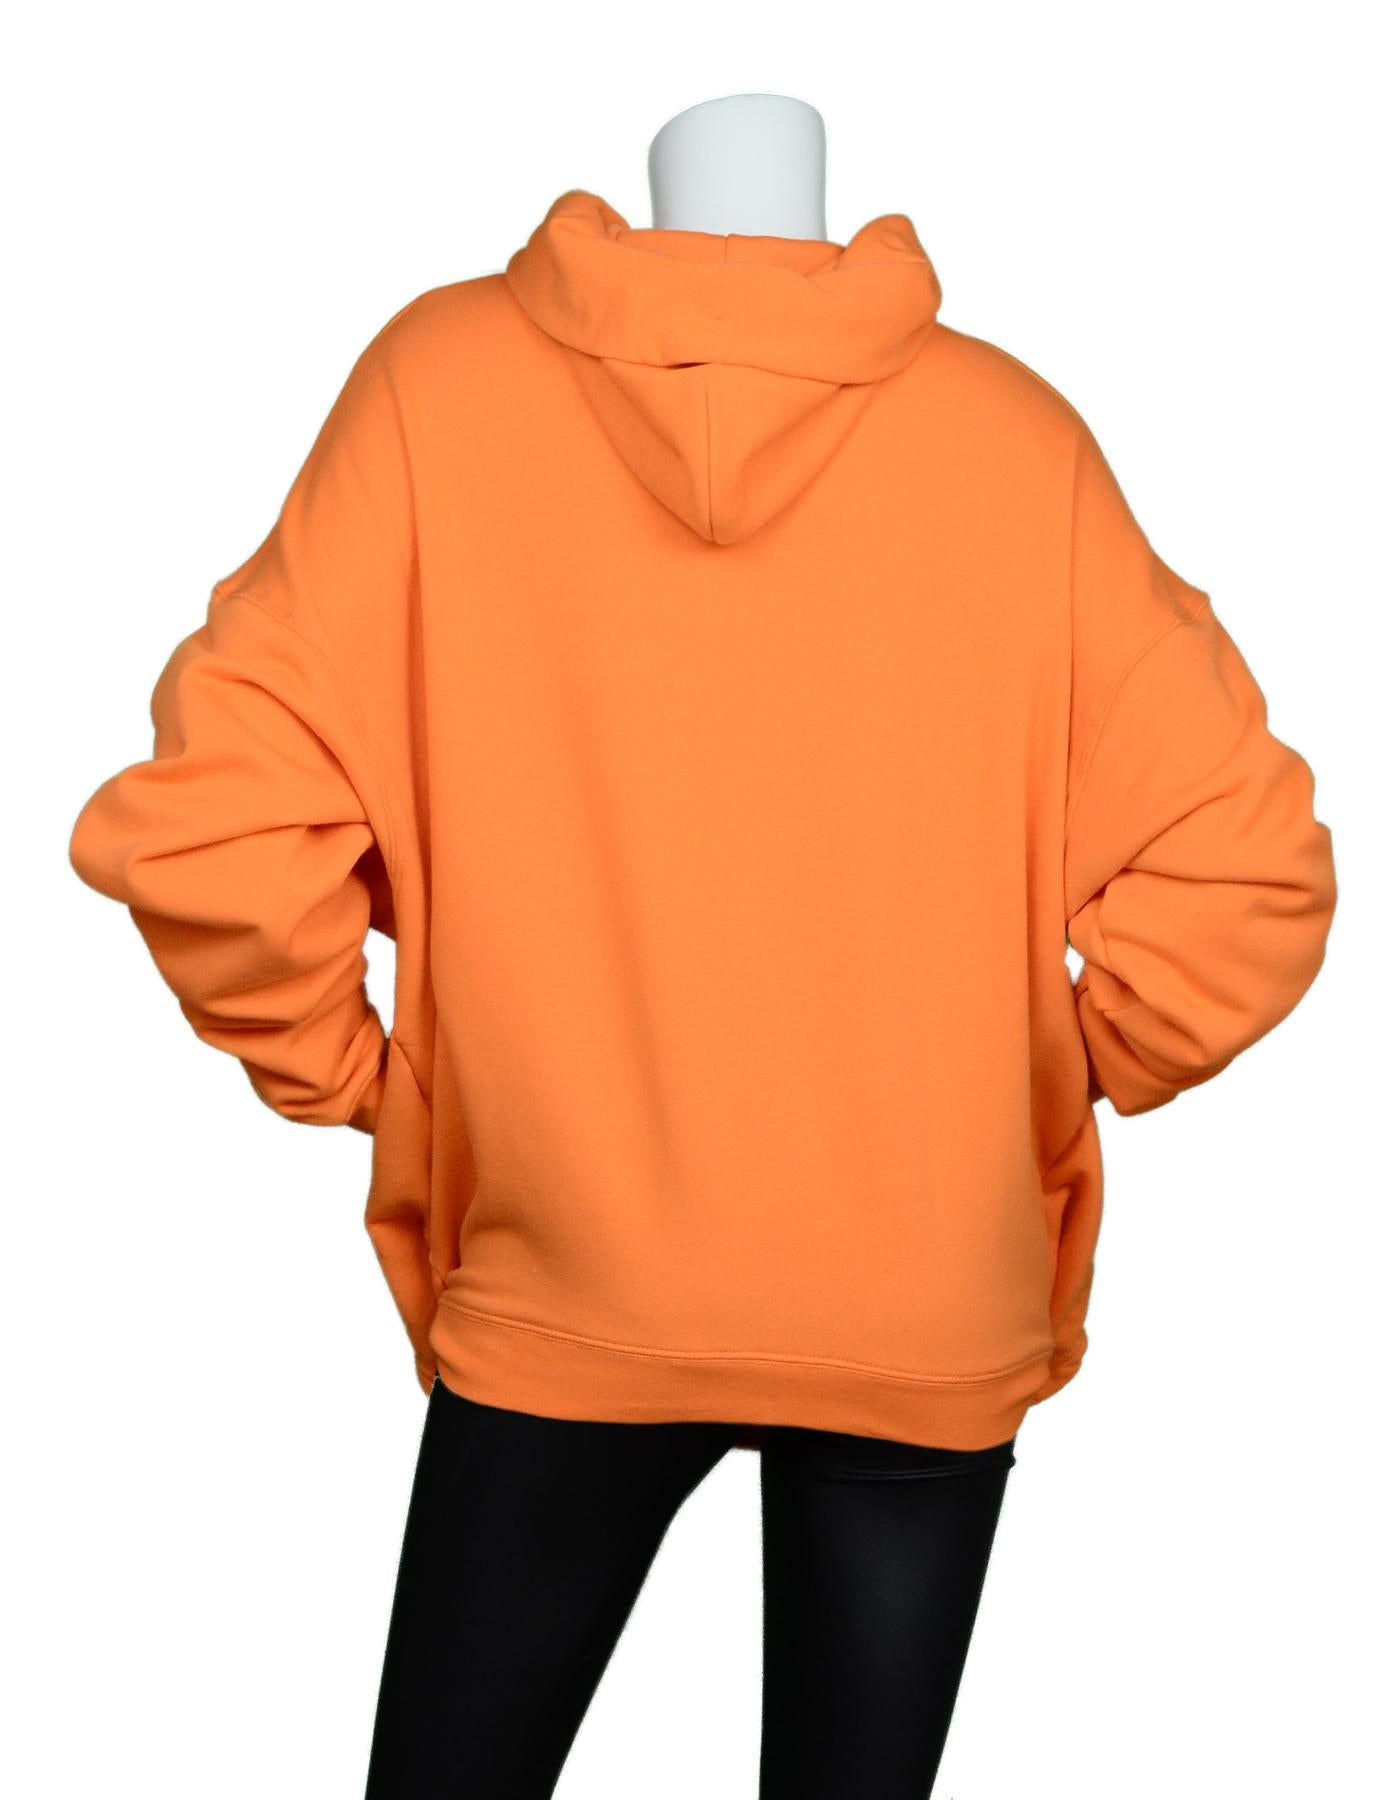 balenciaga sweatsuit mens orange